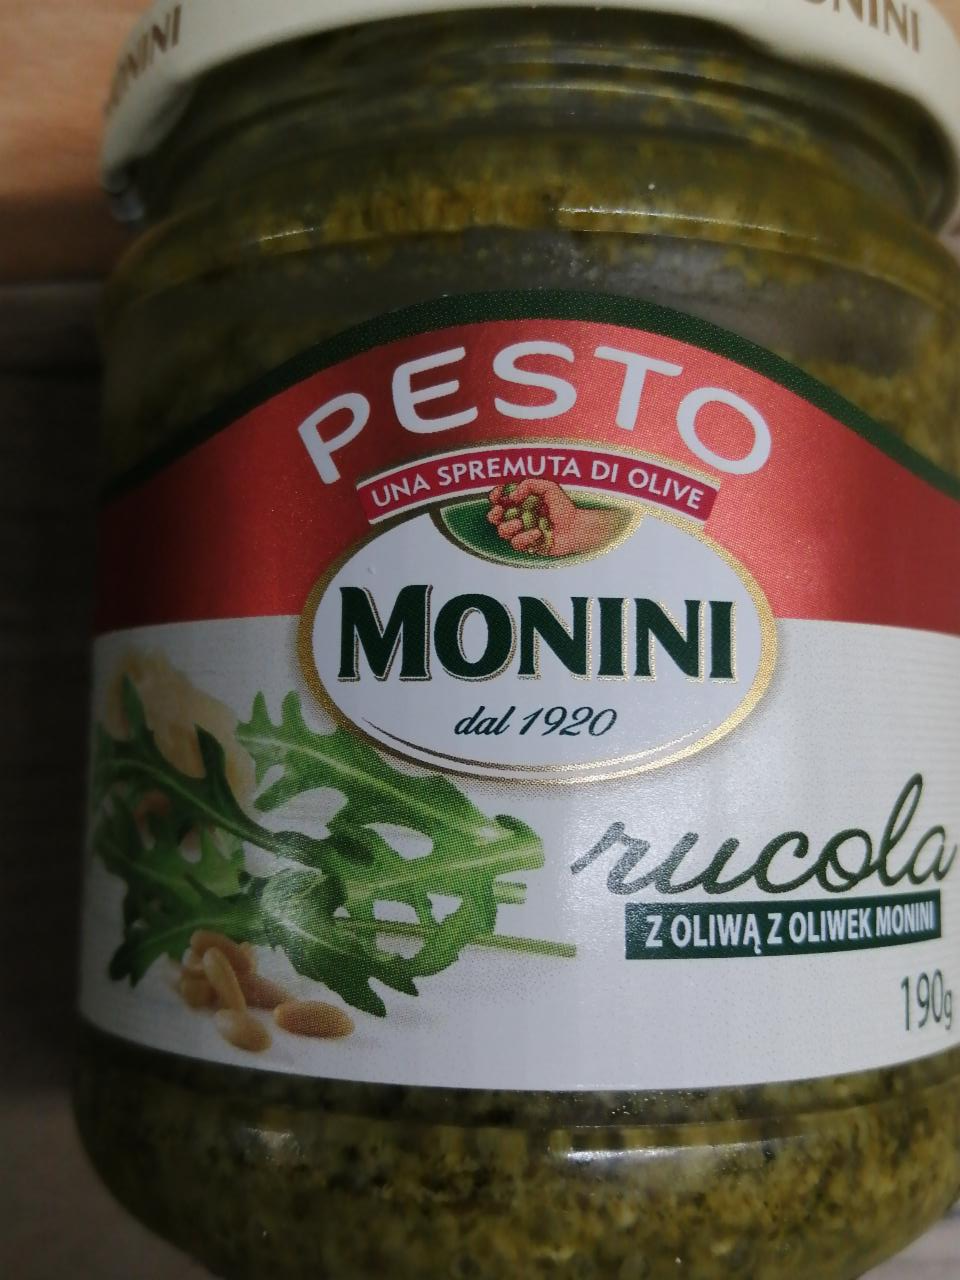 Zdjęcia - Pesto rukolą z oliwa z oliwek Monini